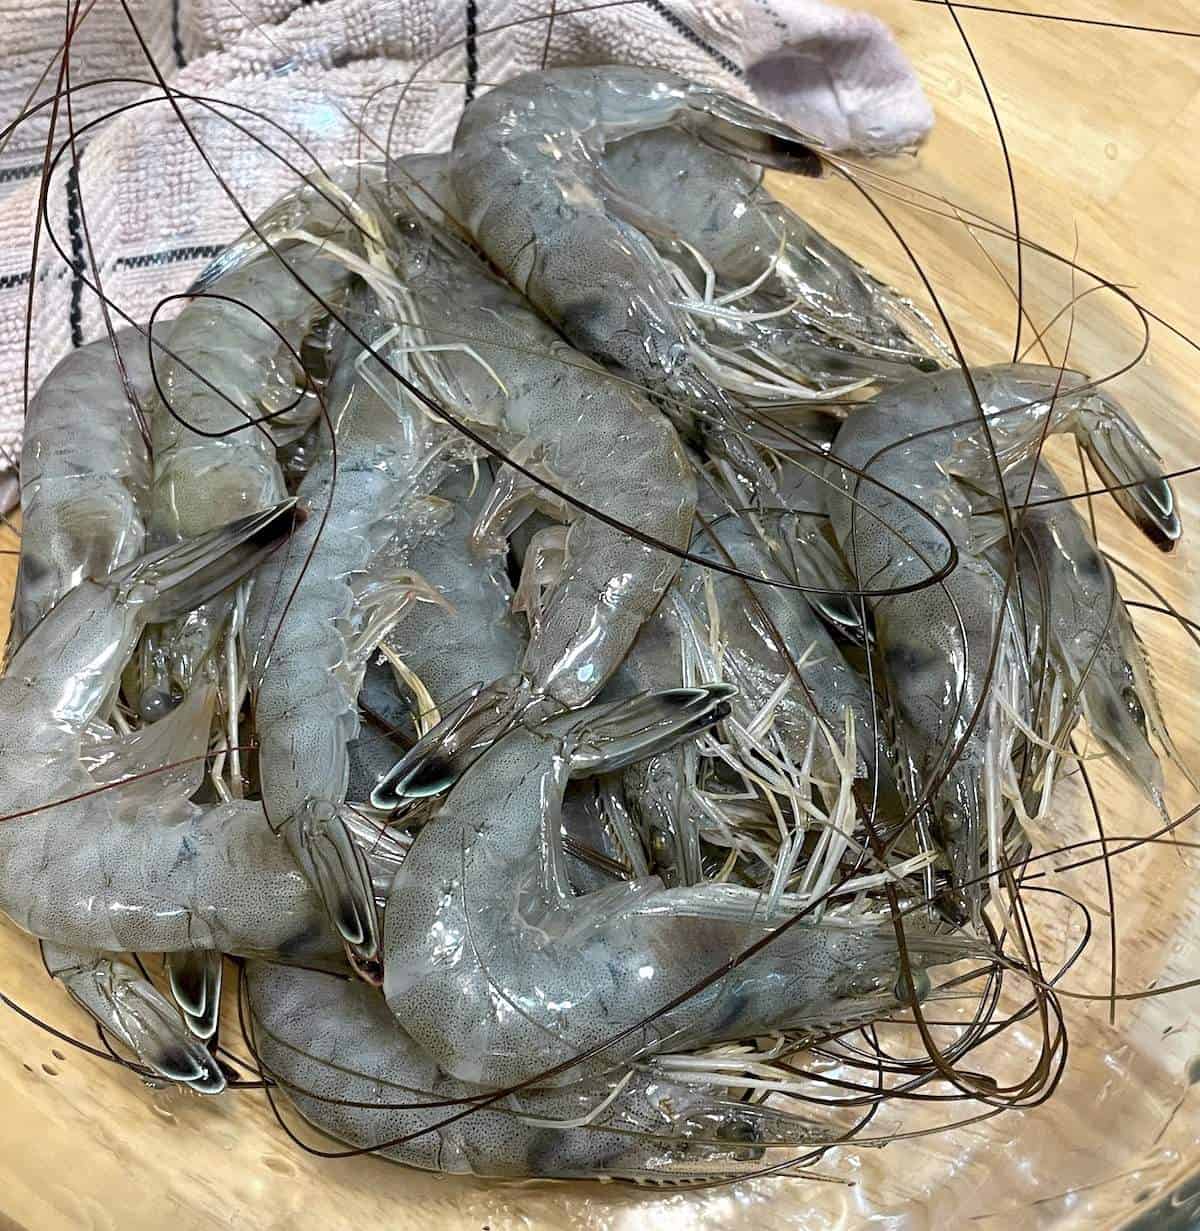 A bowl of freshly caught raw shrimp.